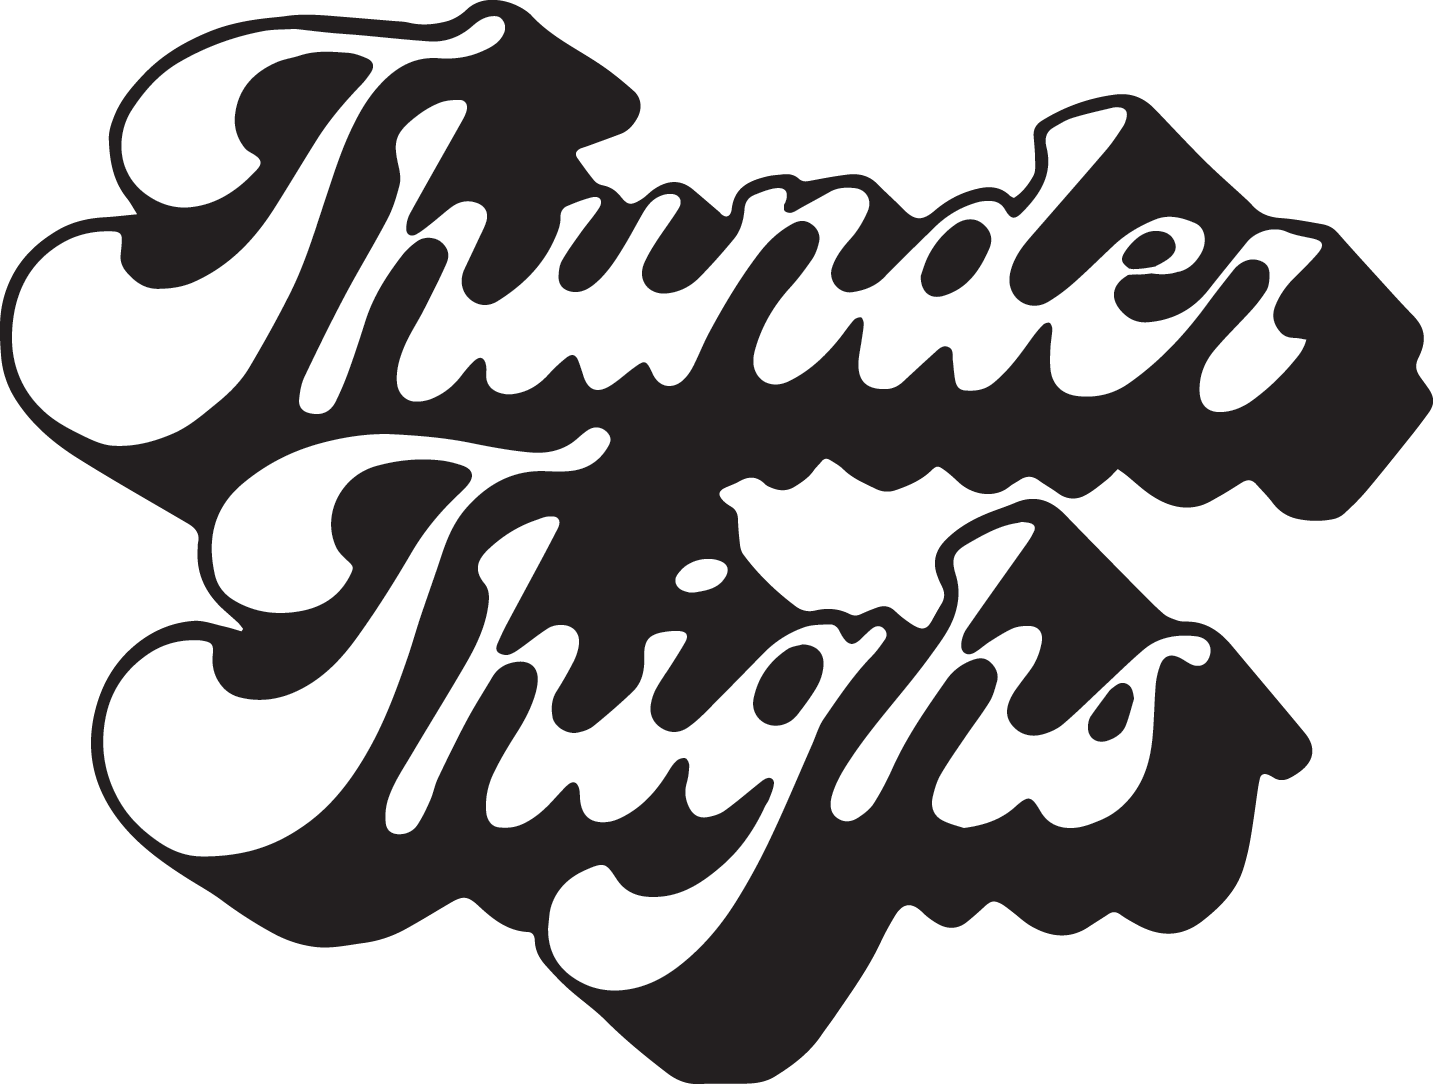 Thunder Thighs Costumes Ltd.